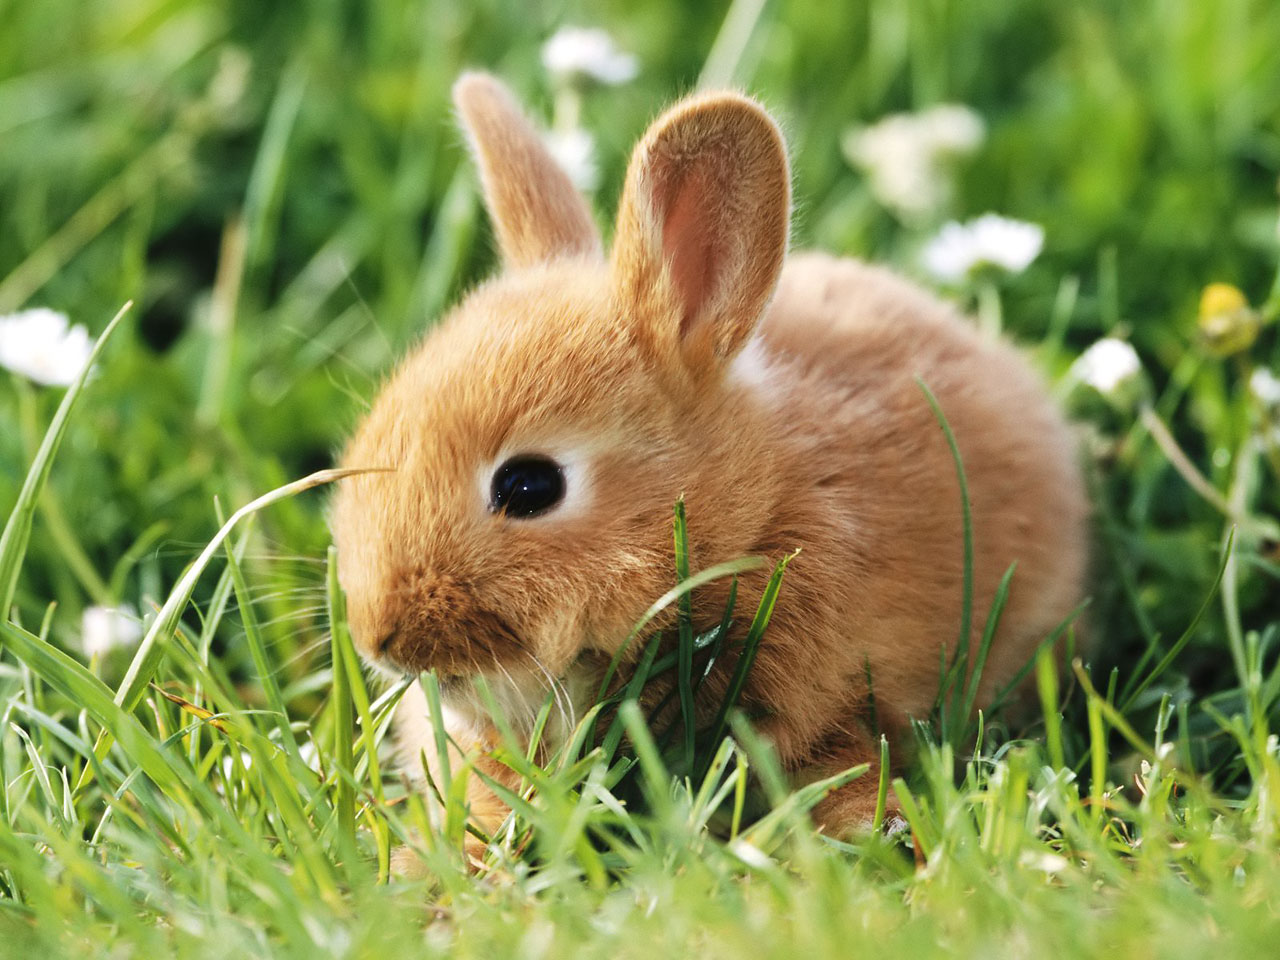 HD WALLPAPERS Cute Rabbits